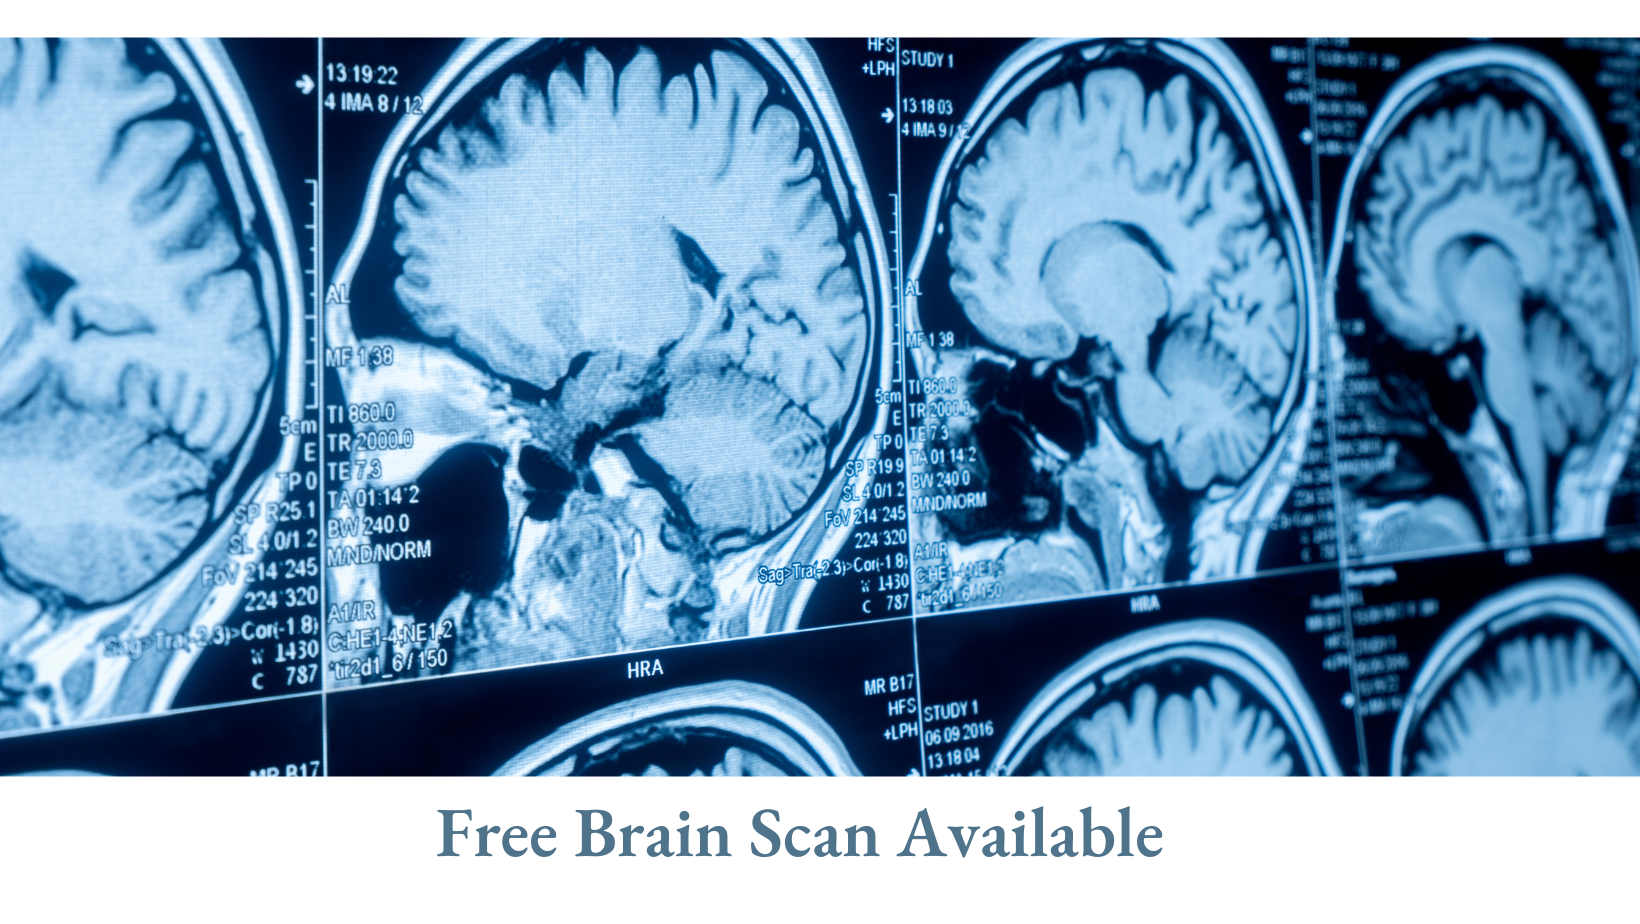 Participate in a brain health study and receive a free brain scan